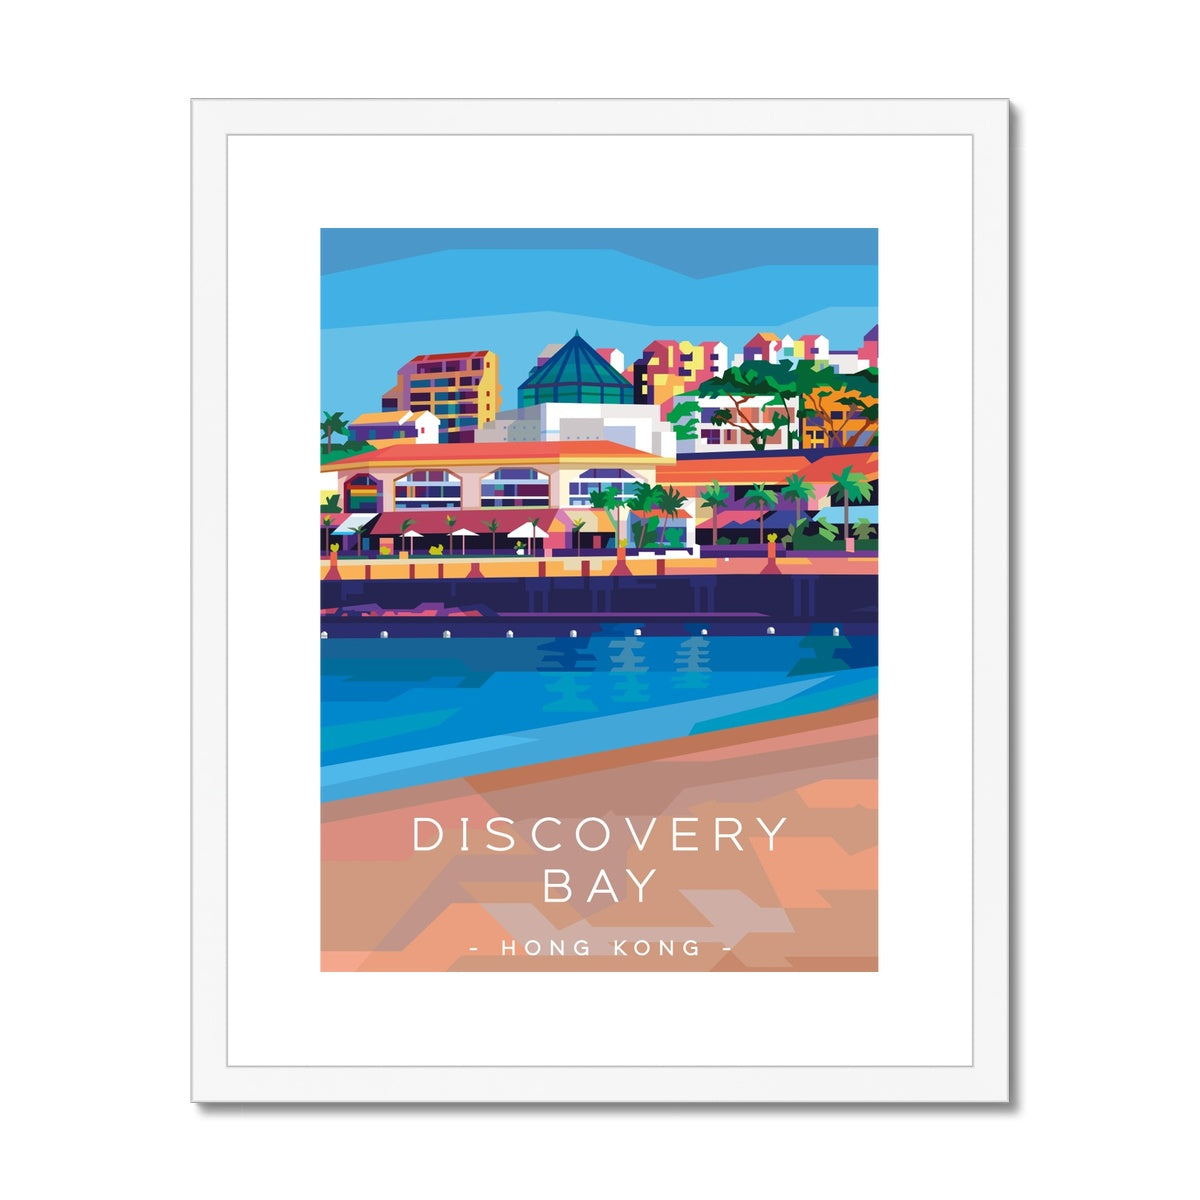 Hong Kong Travel - Discovery Bay Framed & Mounted Print